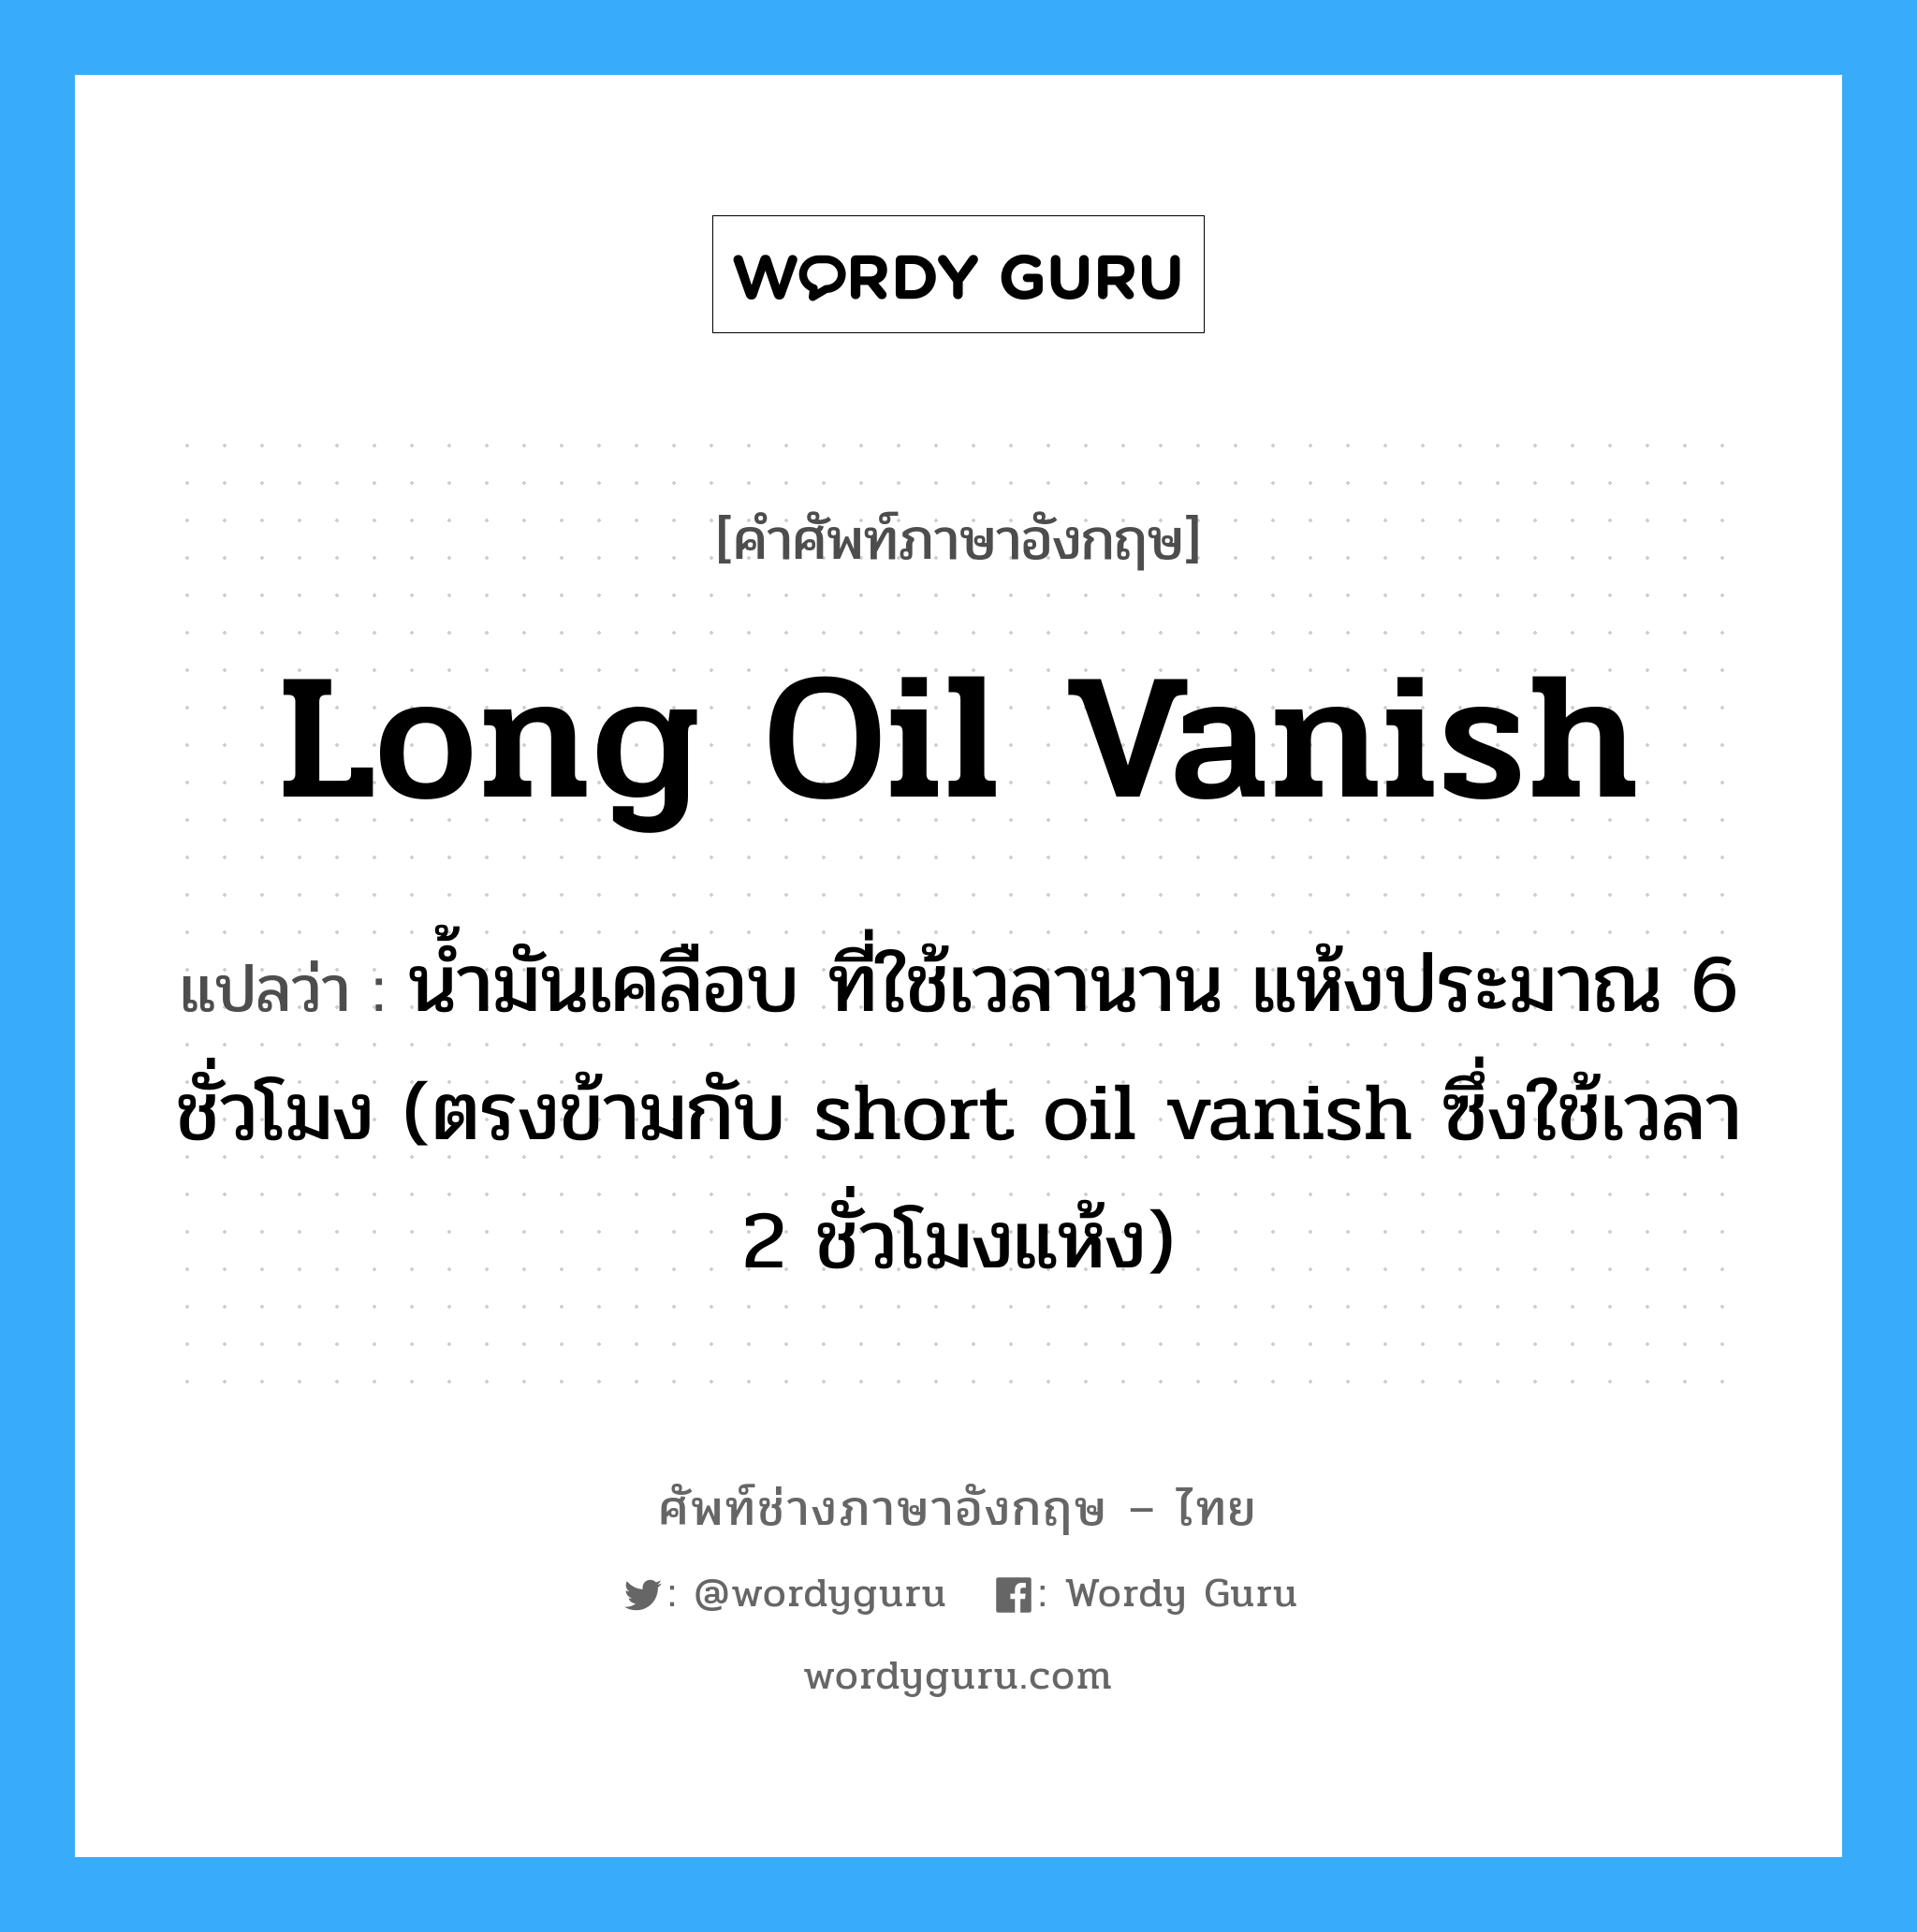 long oil vanish แปลว่า?, คำศัพท์ช่างภาษาอังกฤษ - ไทย long oil vanish คำศัพท์ภาษาอังกฤษ long oil vanish แปลว่า น้ำมันเคลือบ ที่ใช้เวลานาน แห้งประมาณ 6 ชั่วโมง (ตรงข้ามกับ short oil vanish ซึ่งใช้เวลา 2 ชั่วโมงแห้ง)